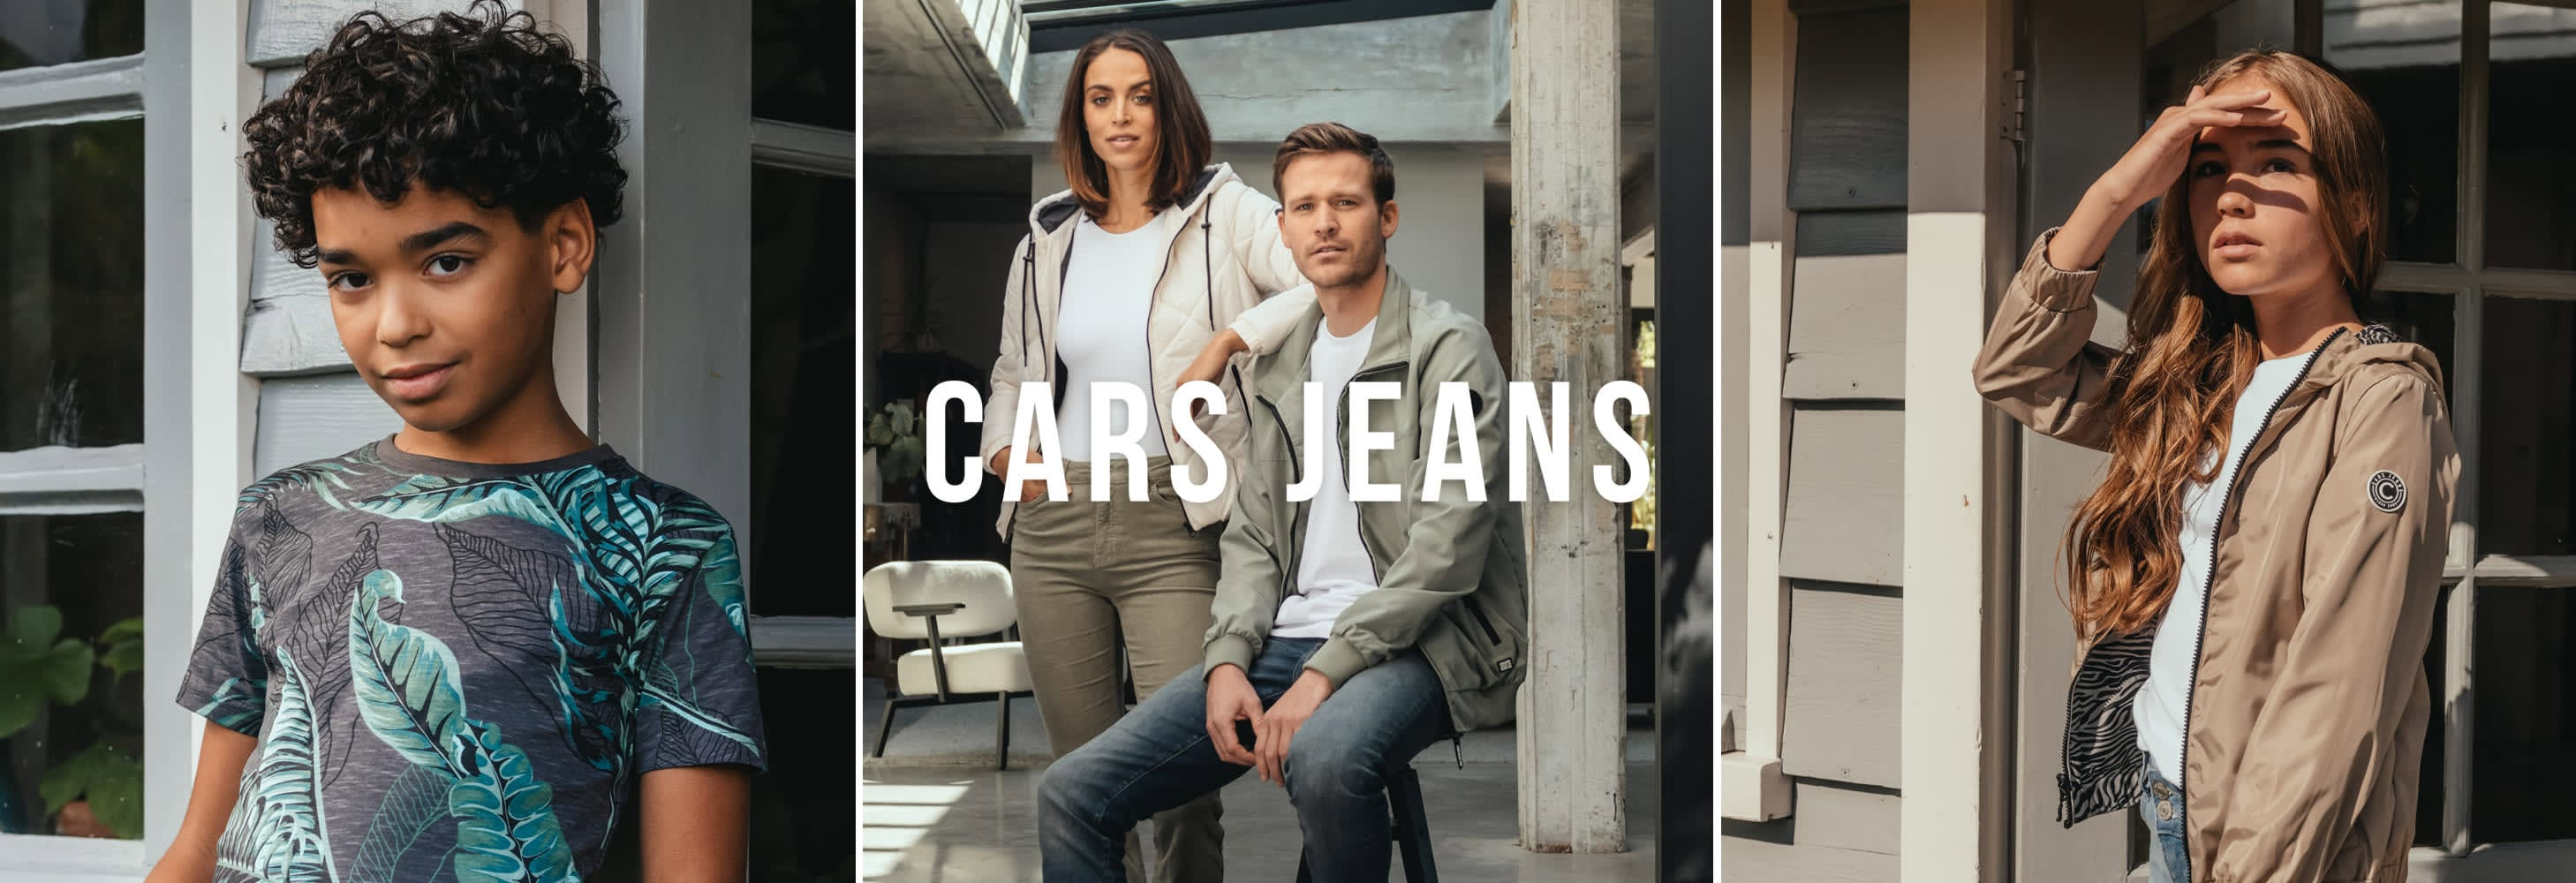 Spotlijster Mentaliteit bundel Cars jeans en kleding kopen | There for fashion | Jeans Centre